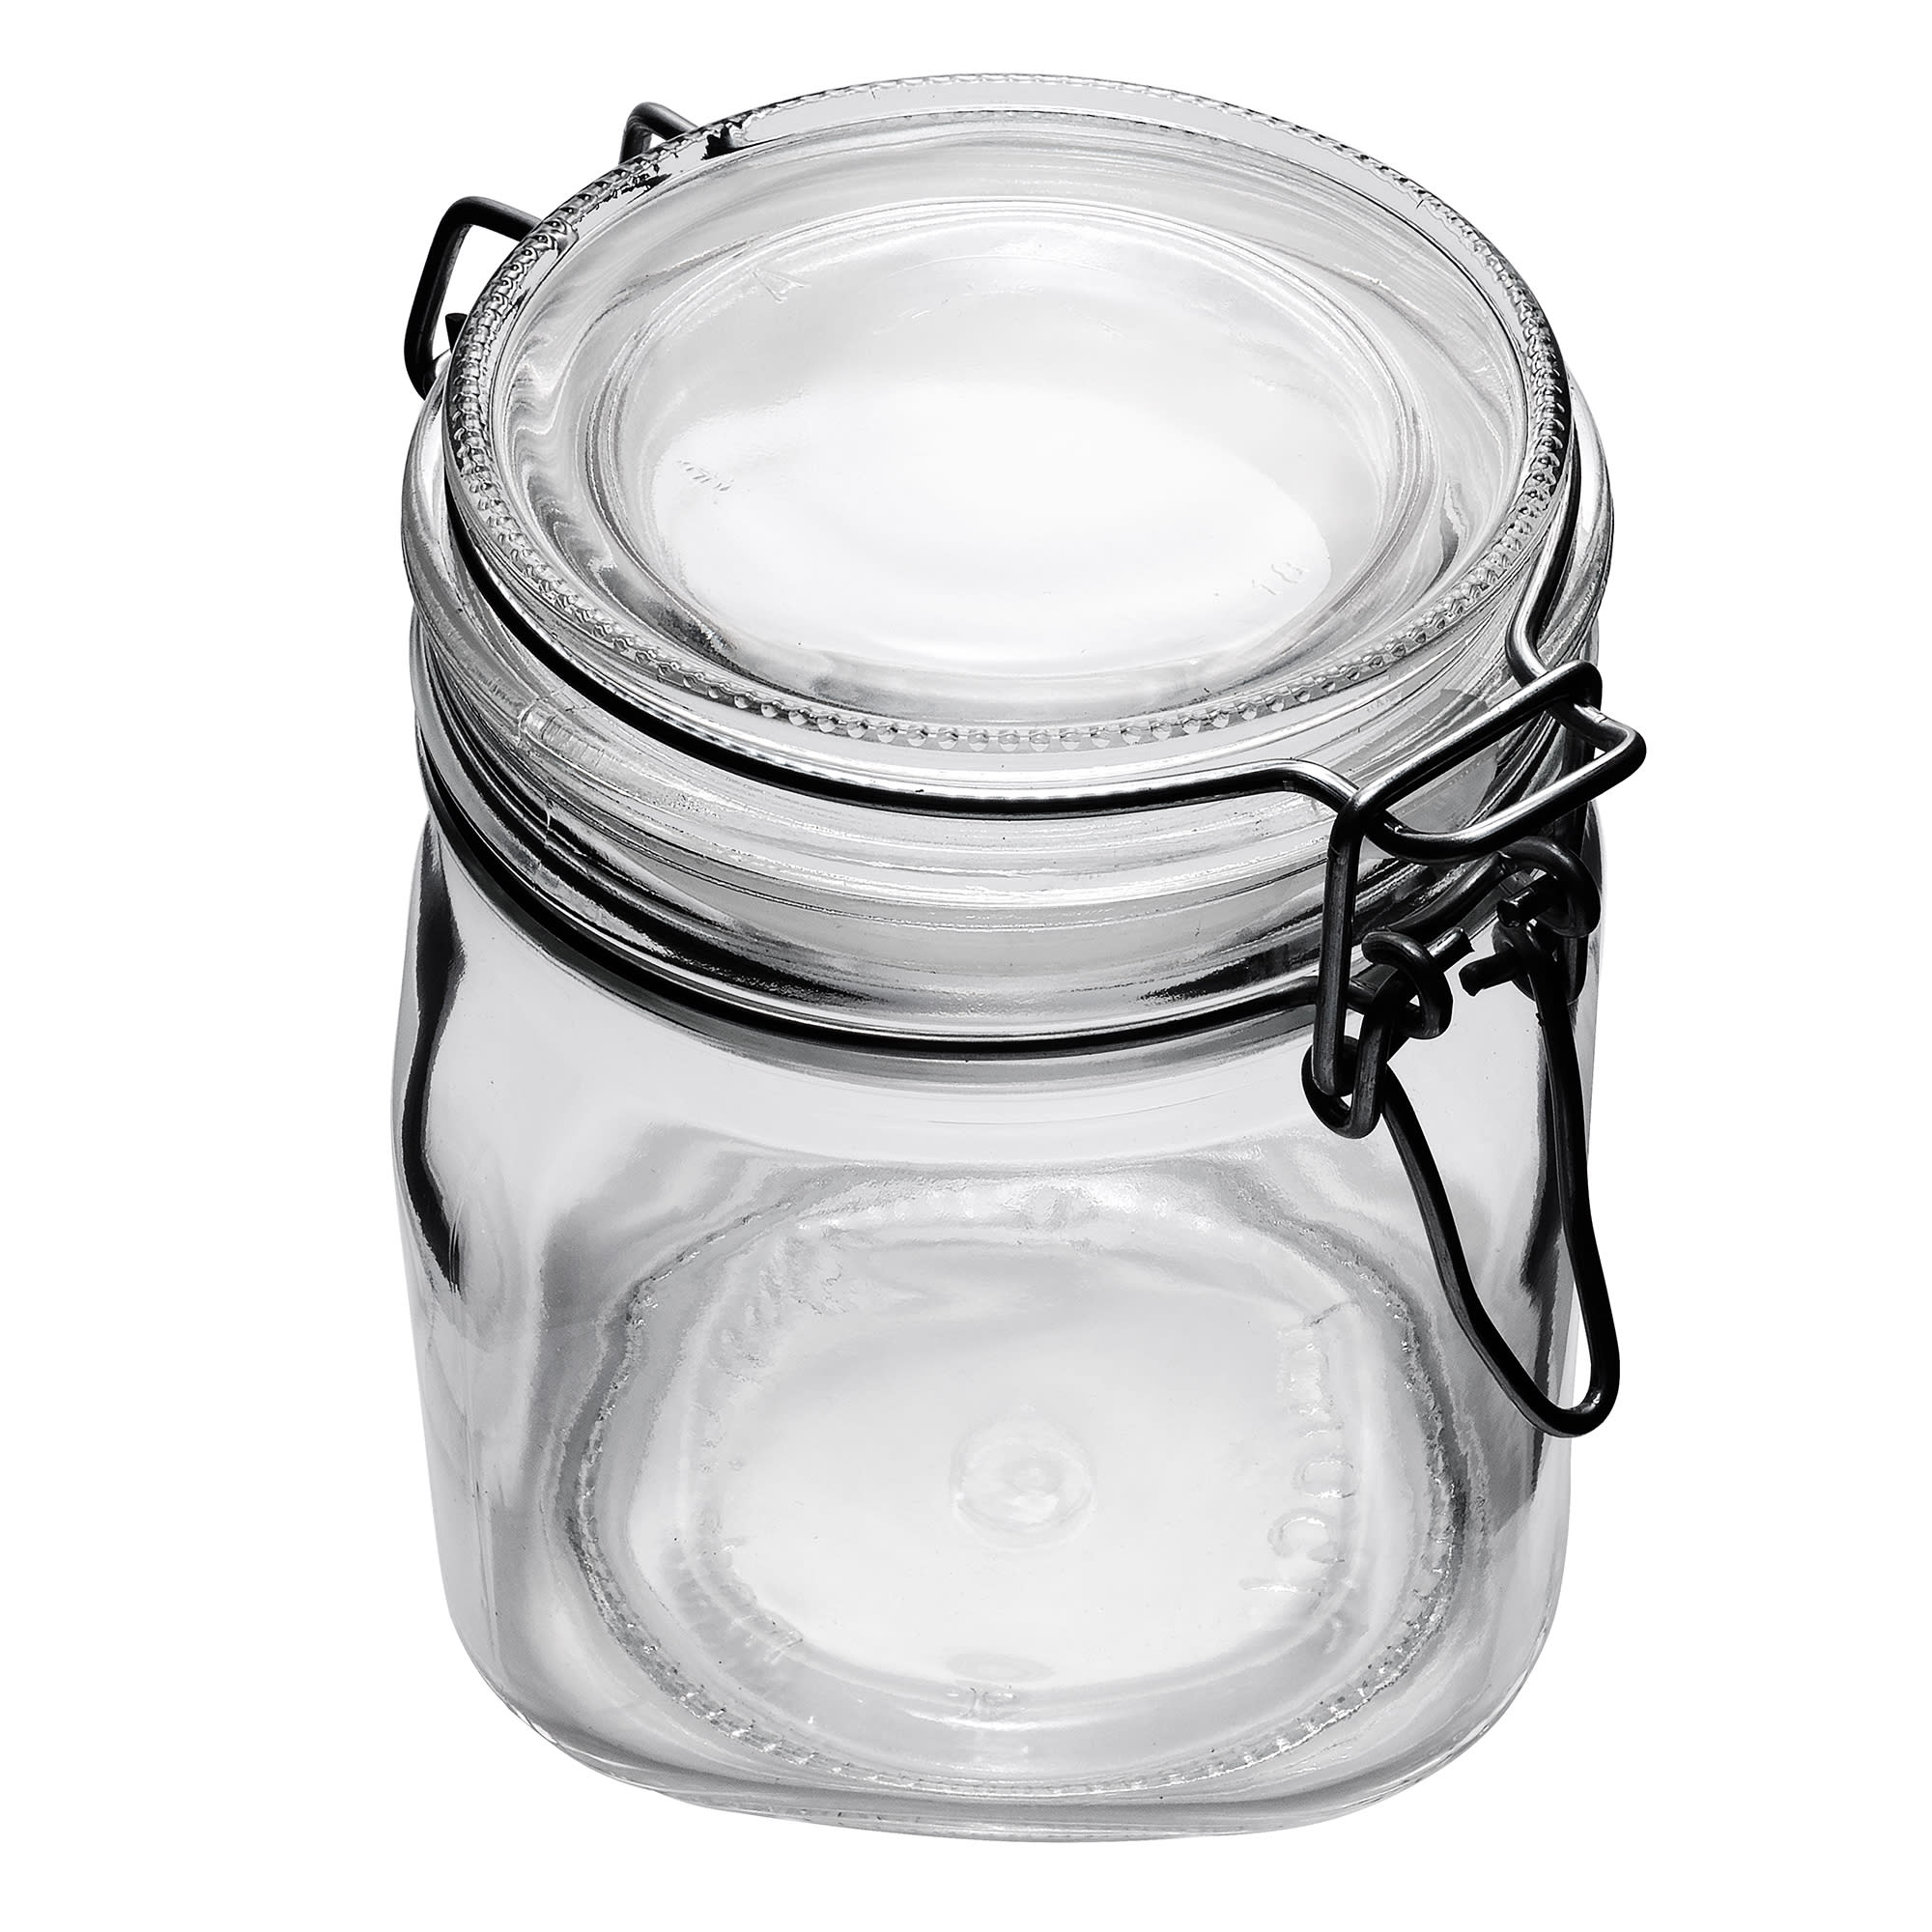 Libbey 17209925 25 1 4 Oz Glass Jar, Jar With Clamp Lid